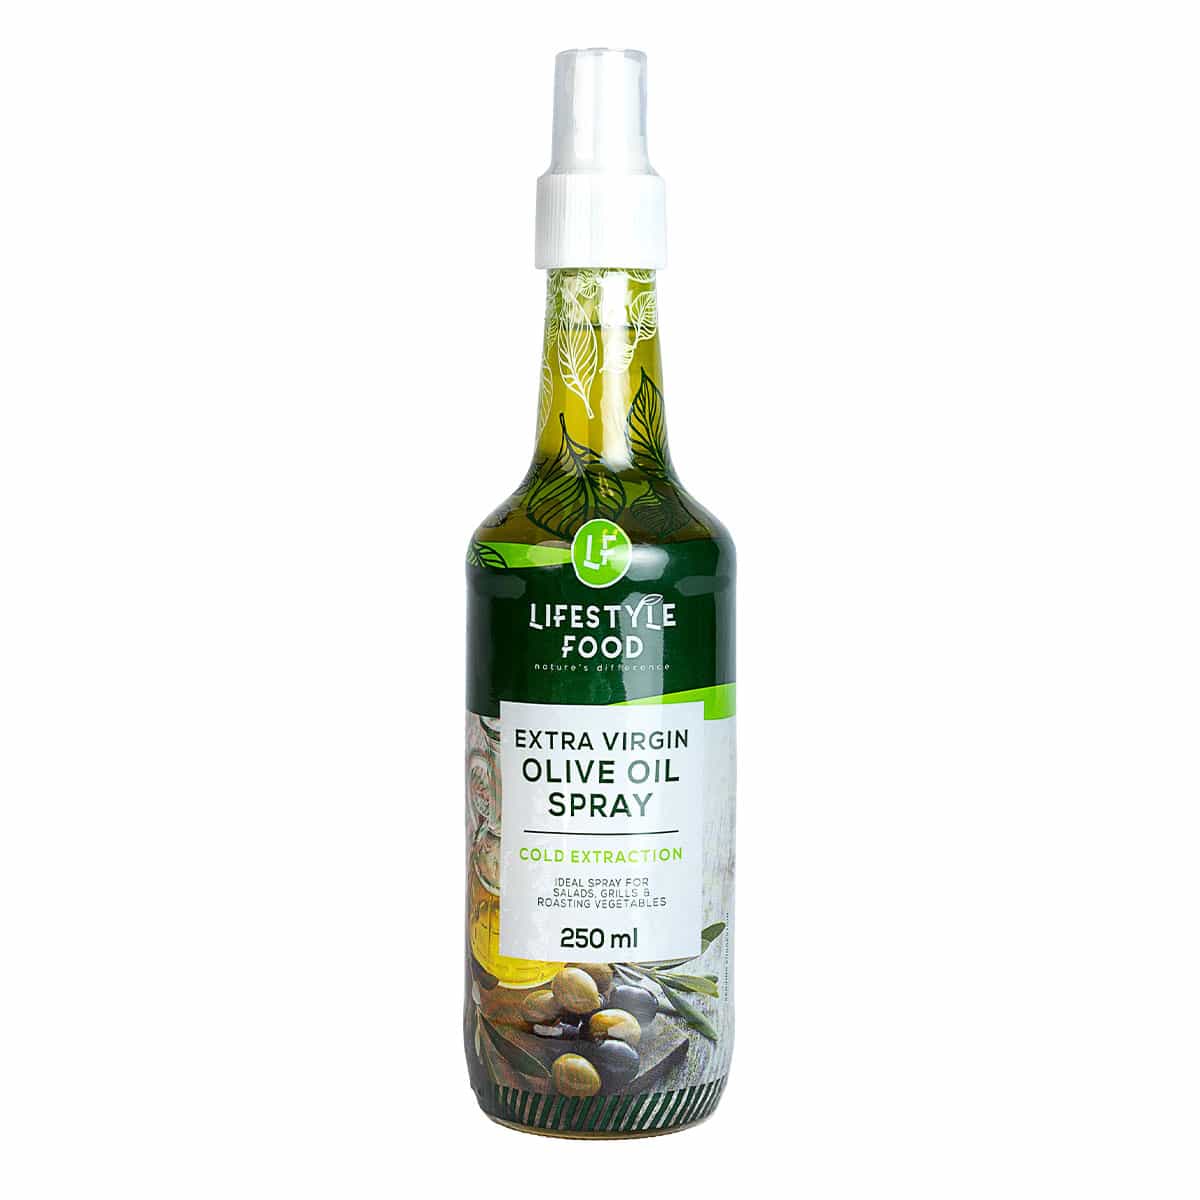 Lifestyle Food Extra Virgin Olive Oil Spray - 250ml